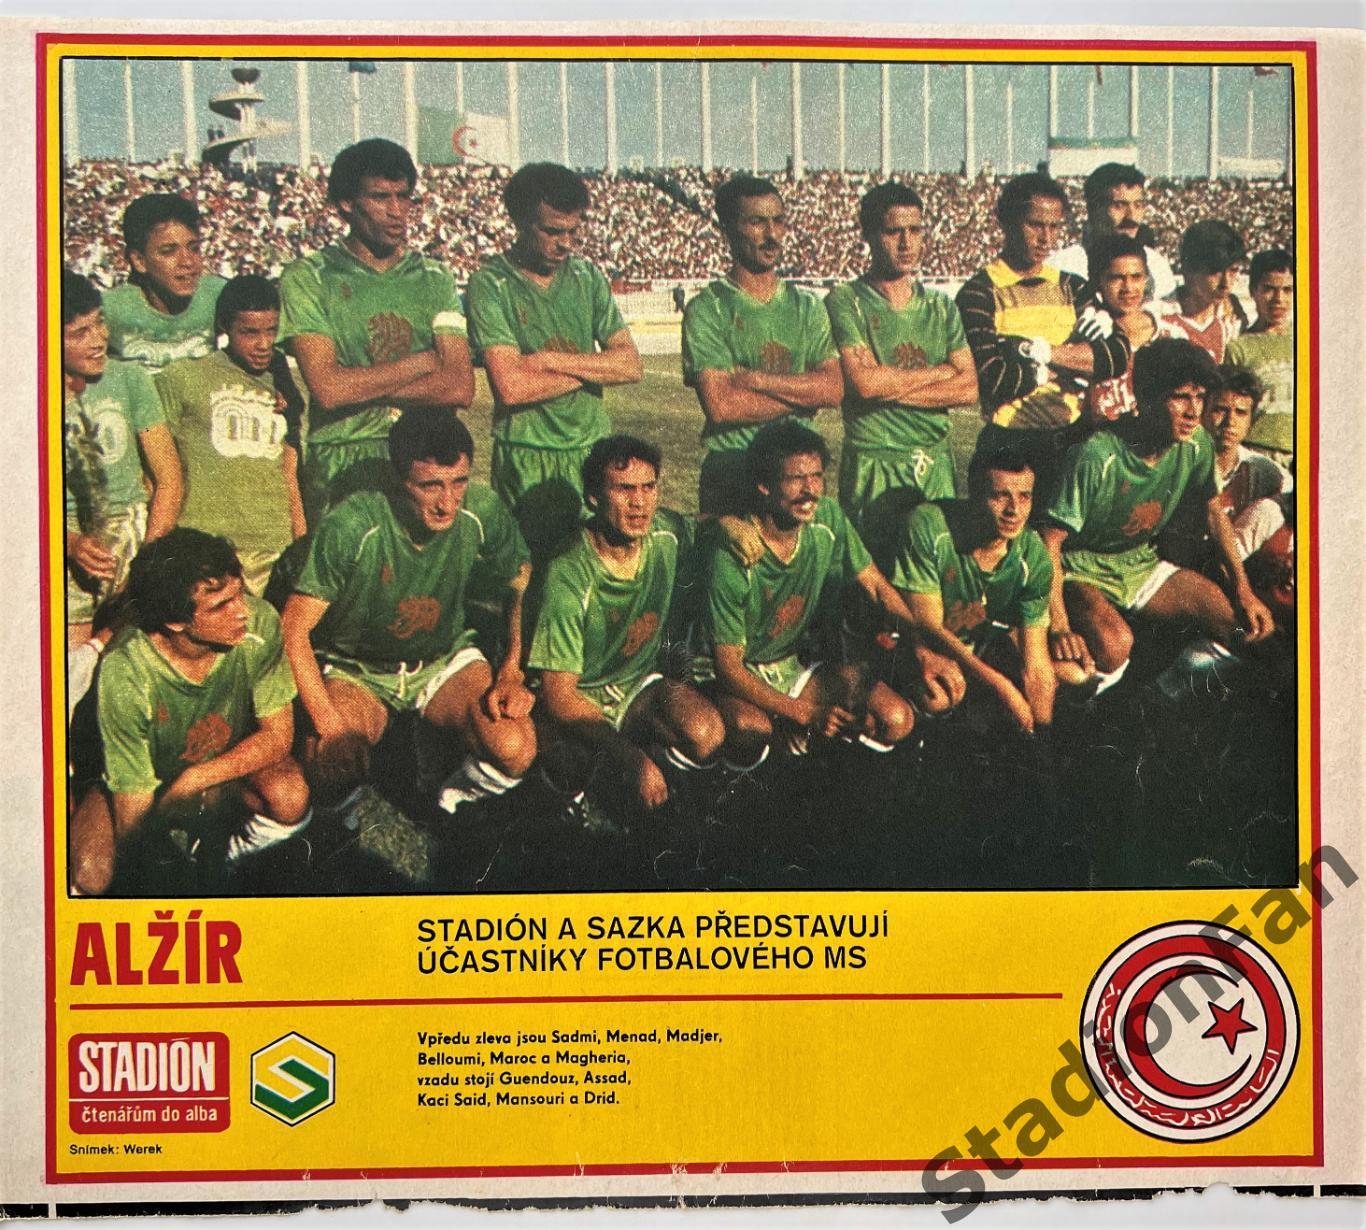 Постер из журнала Stadion - ALZIRSKO 1986